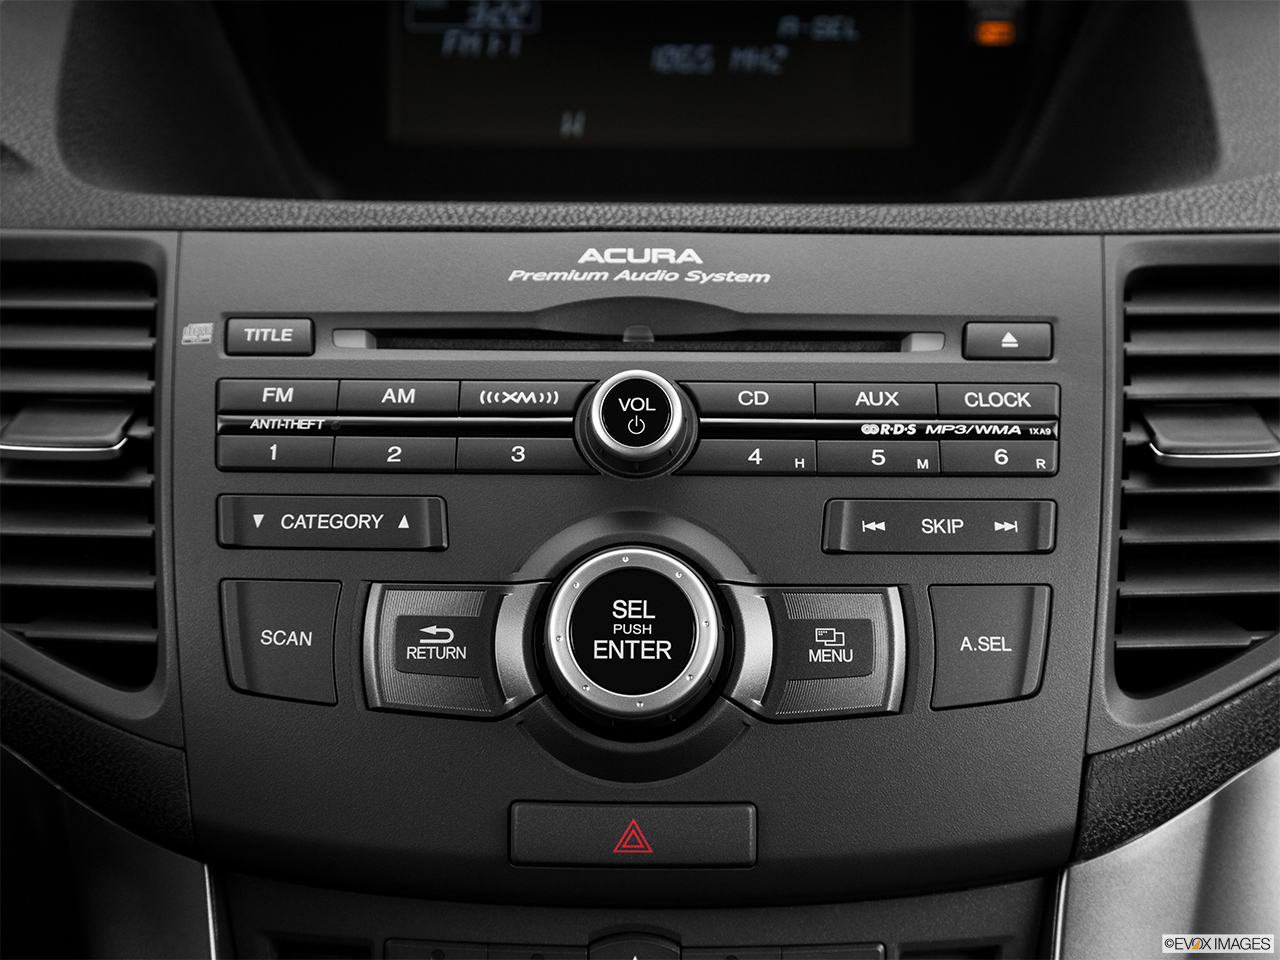 2013 Acura TSX 5-speed Automatic Interior Bonus Shots (no set spec) 